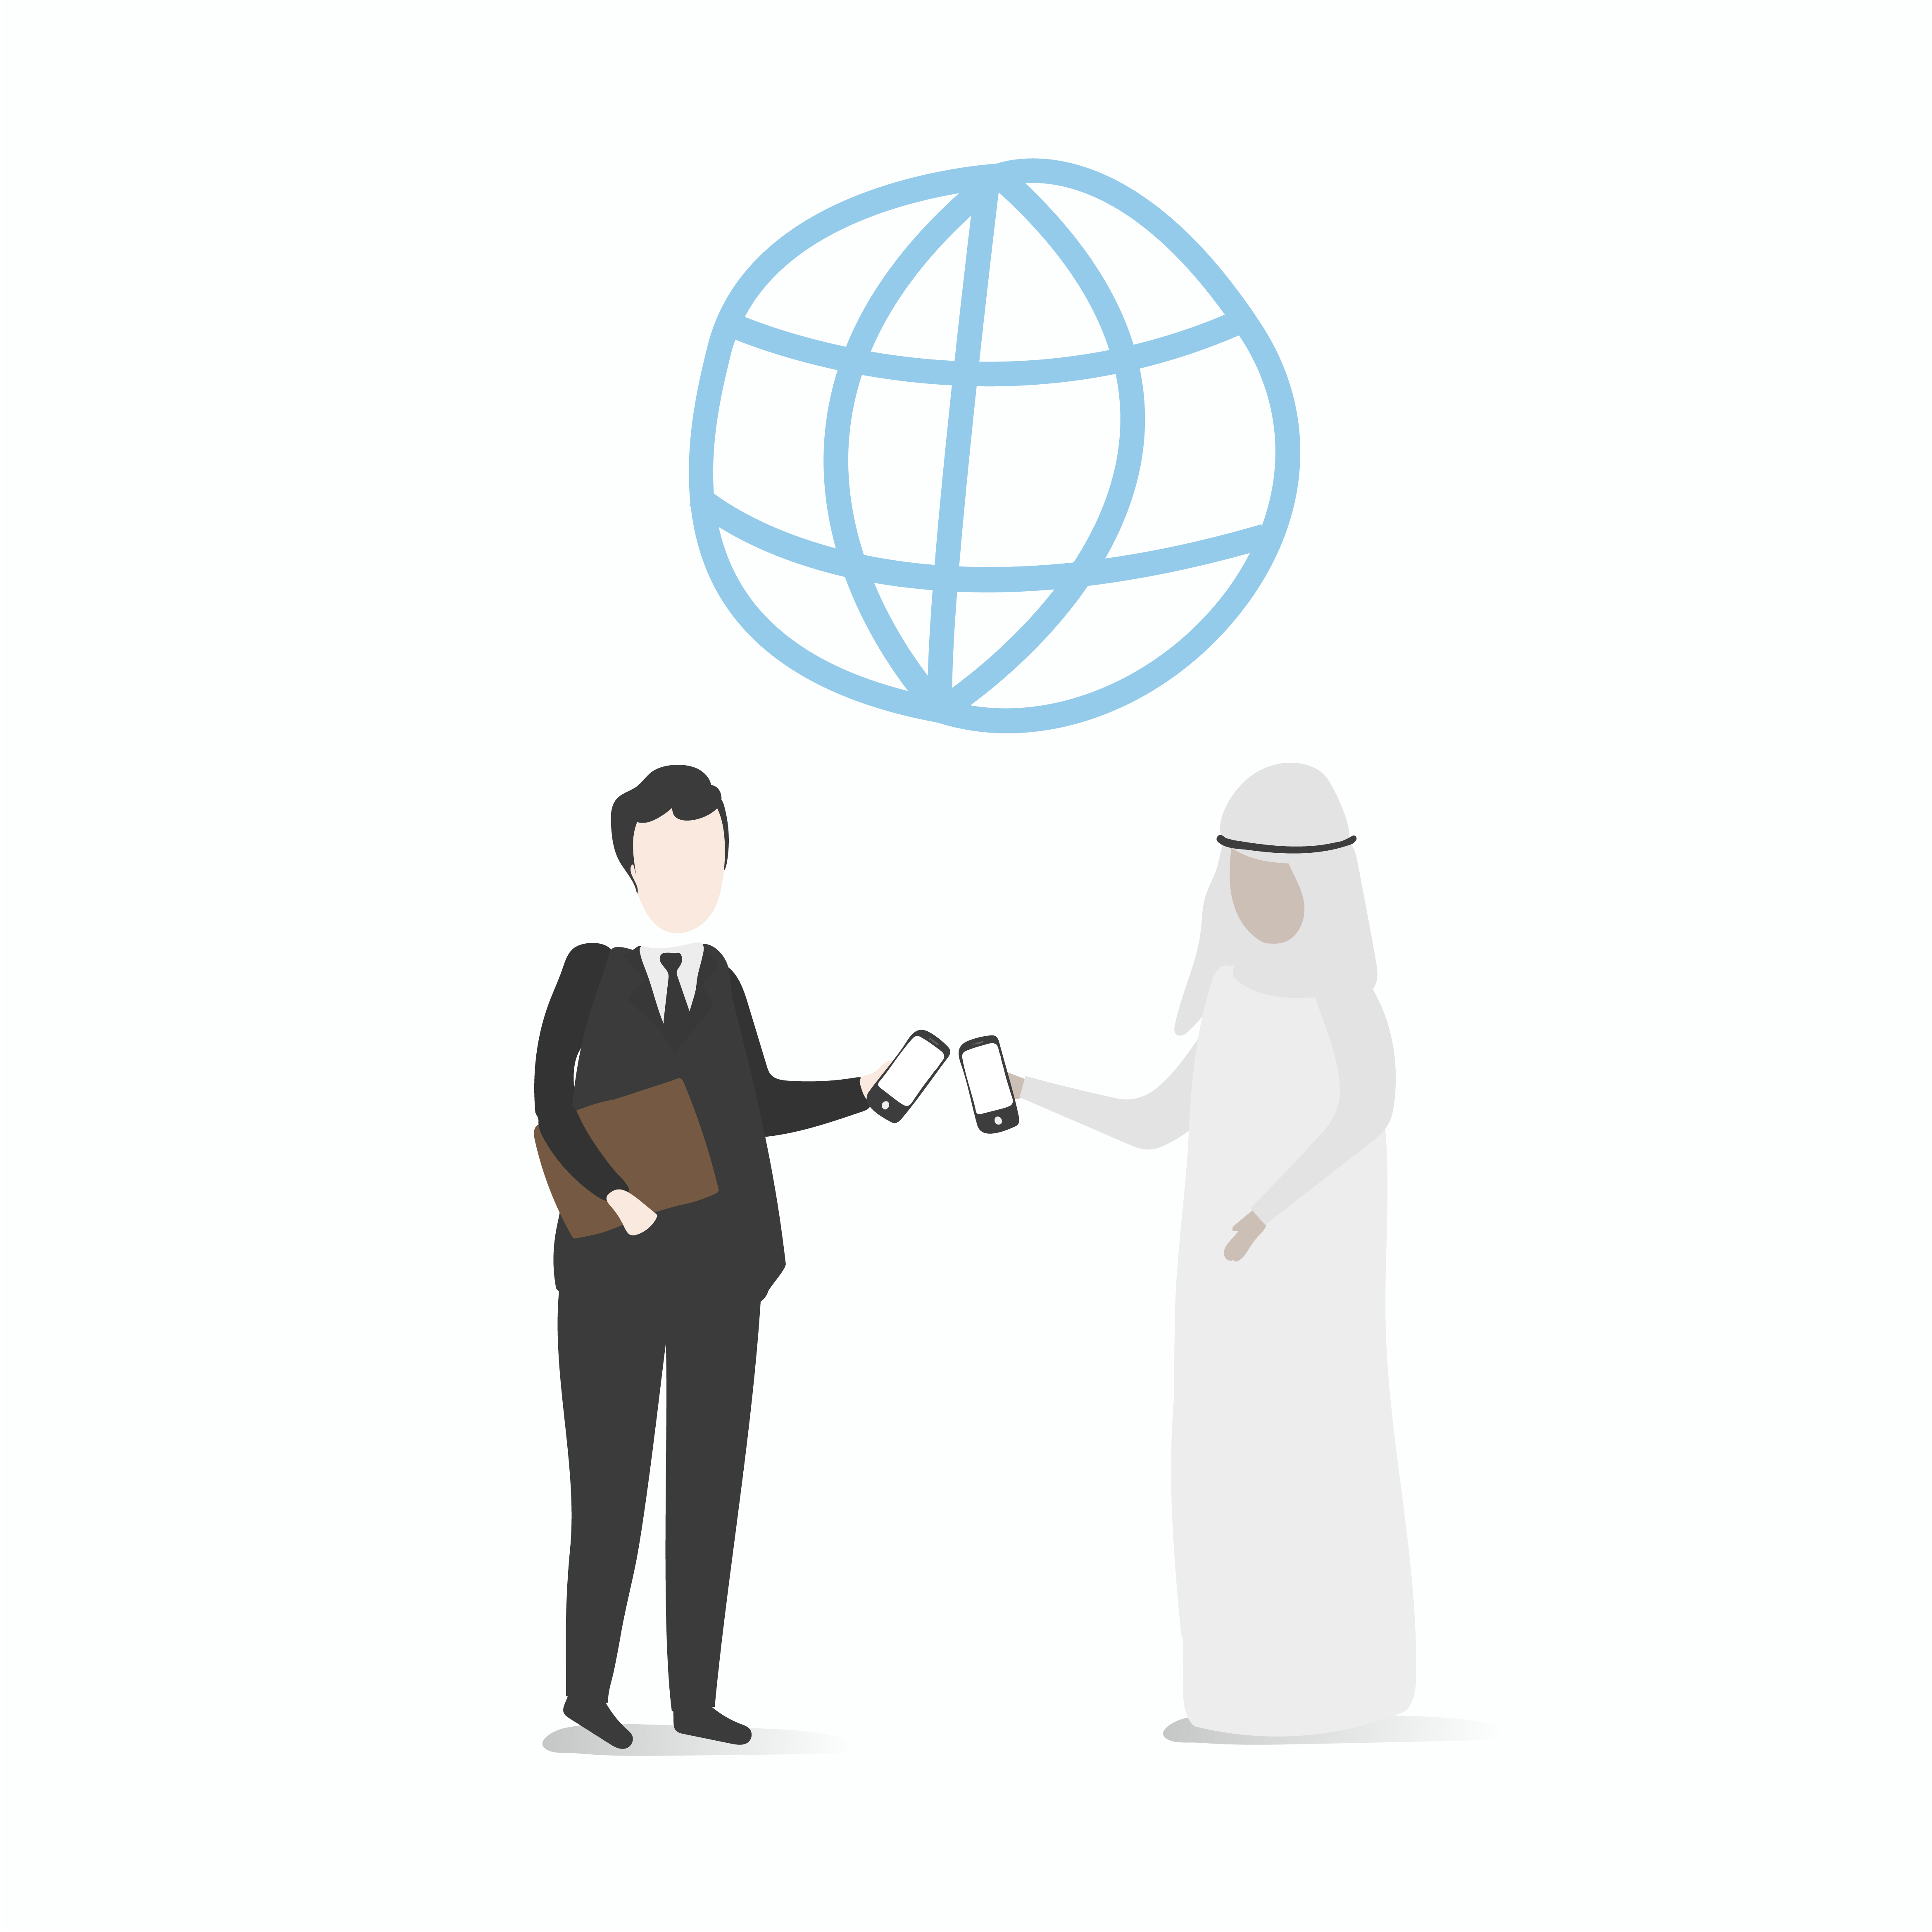 Arabic Language and Business